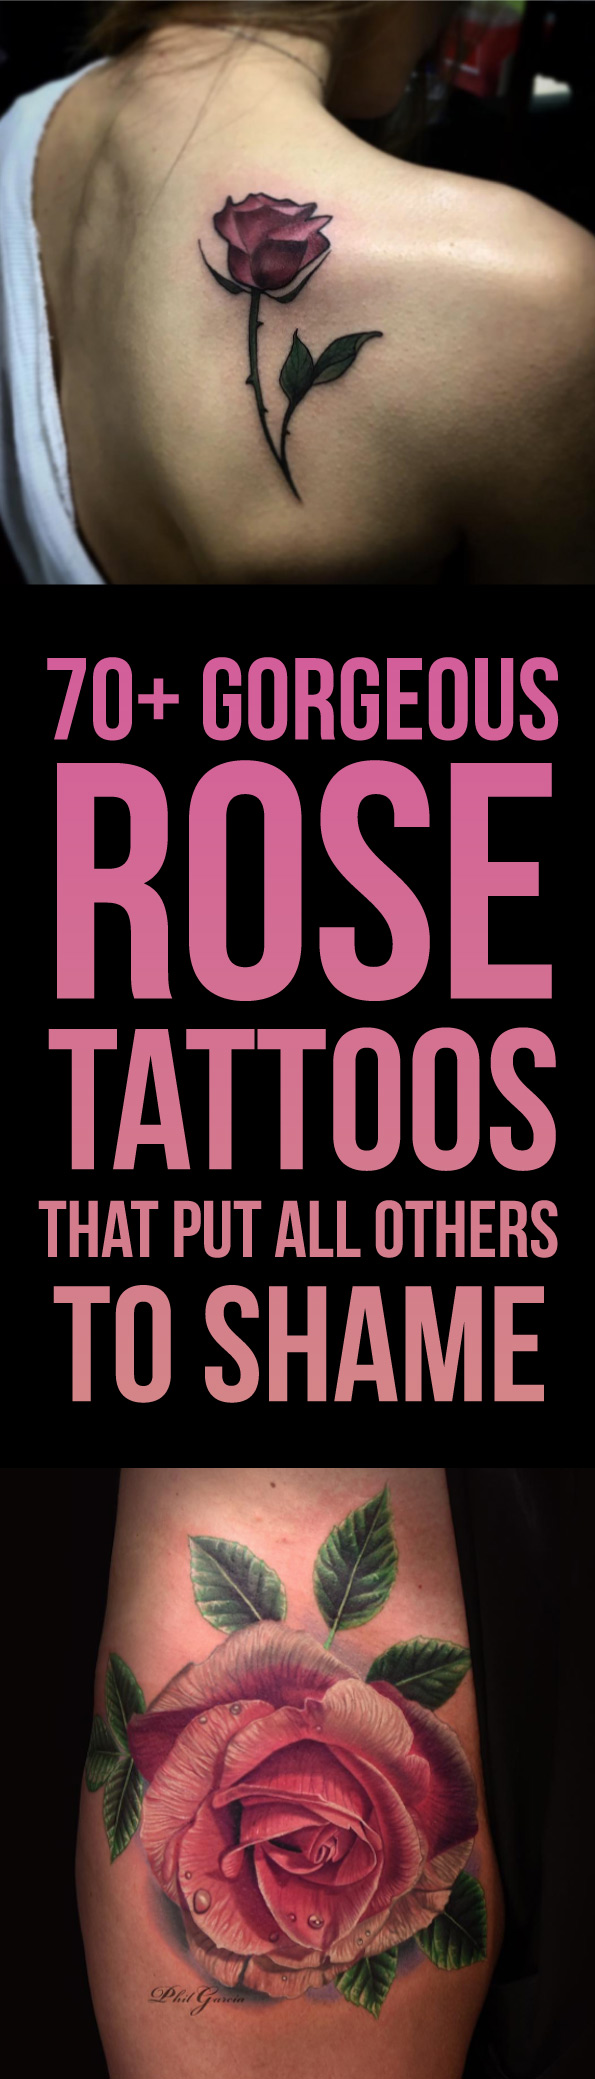 70+ Gorgeous Rose Tattoo Designs | TattooBlend